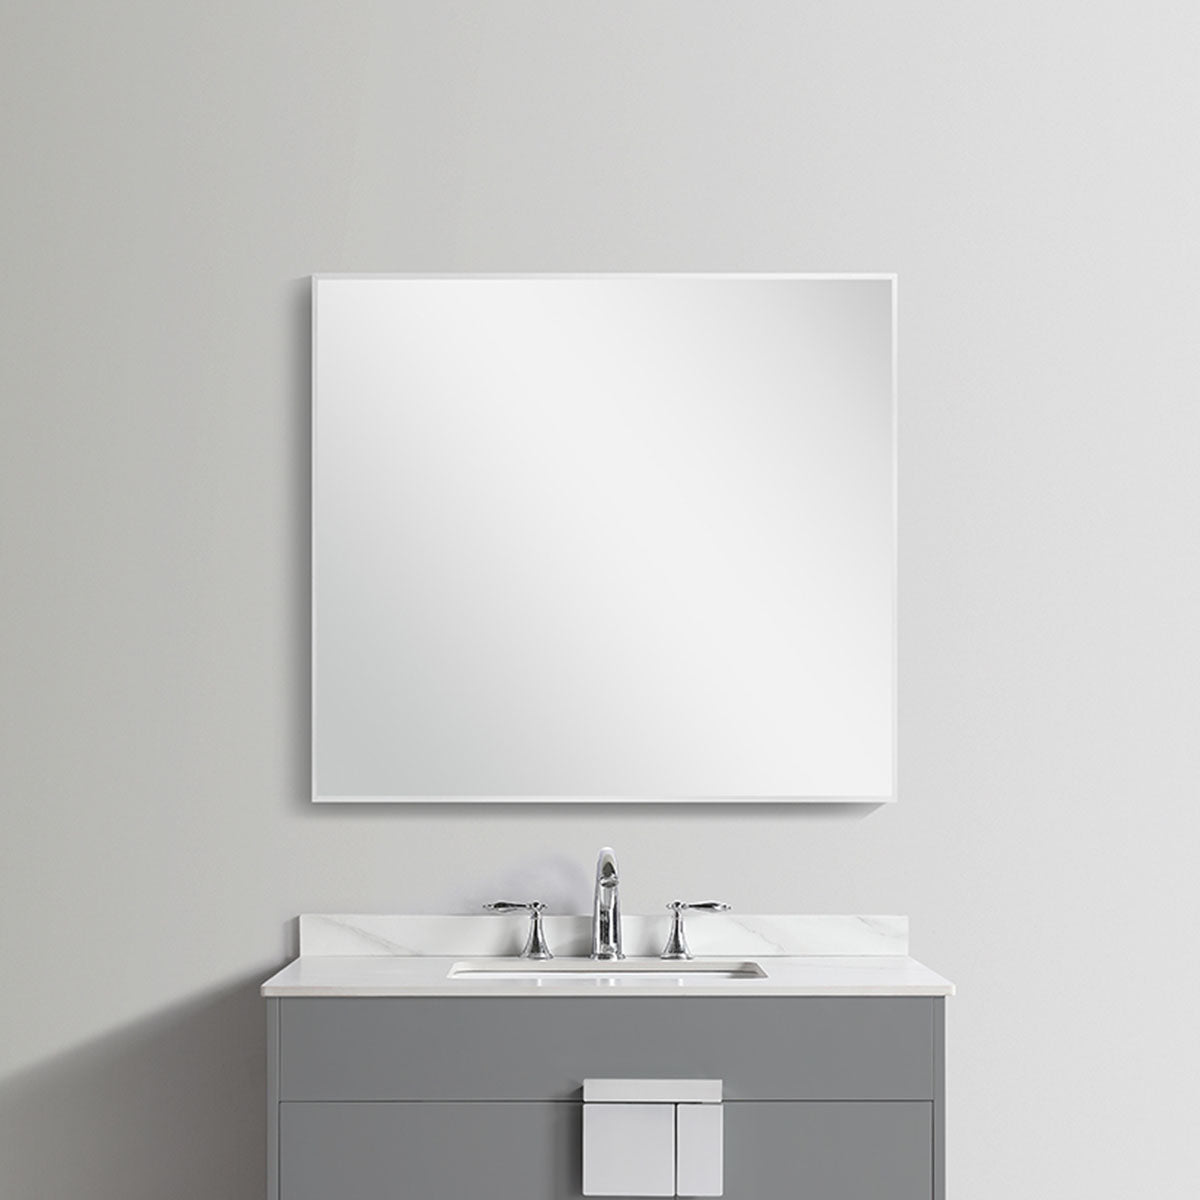 36" x 32" Aluminum Rectangle Bathroom Wall Mirror (Silver)